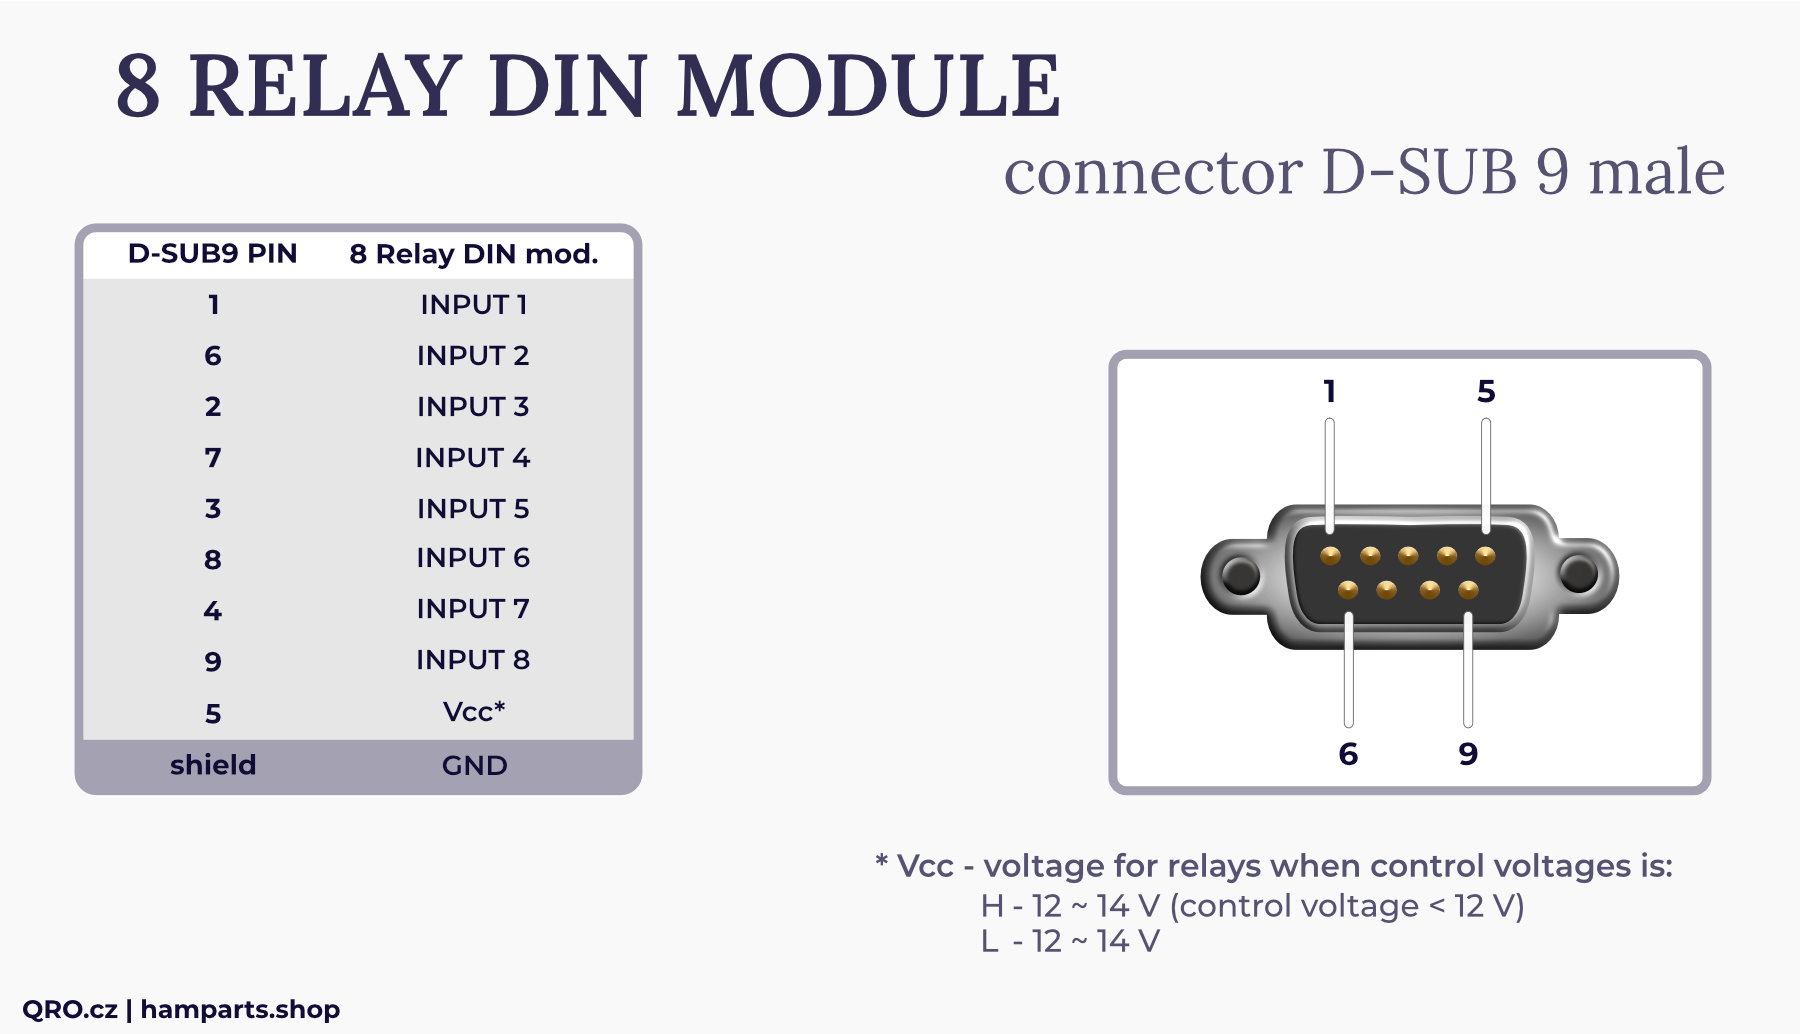 8 relay din module connector d-sub 9 male qro.cz hamparts.shop